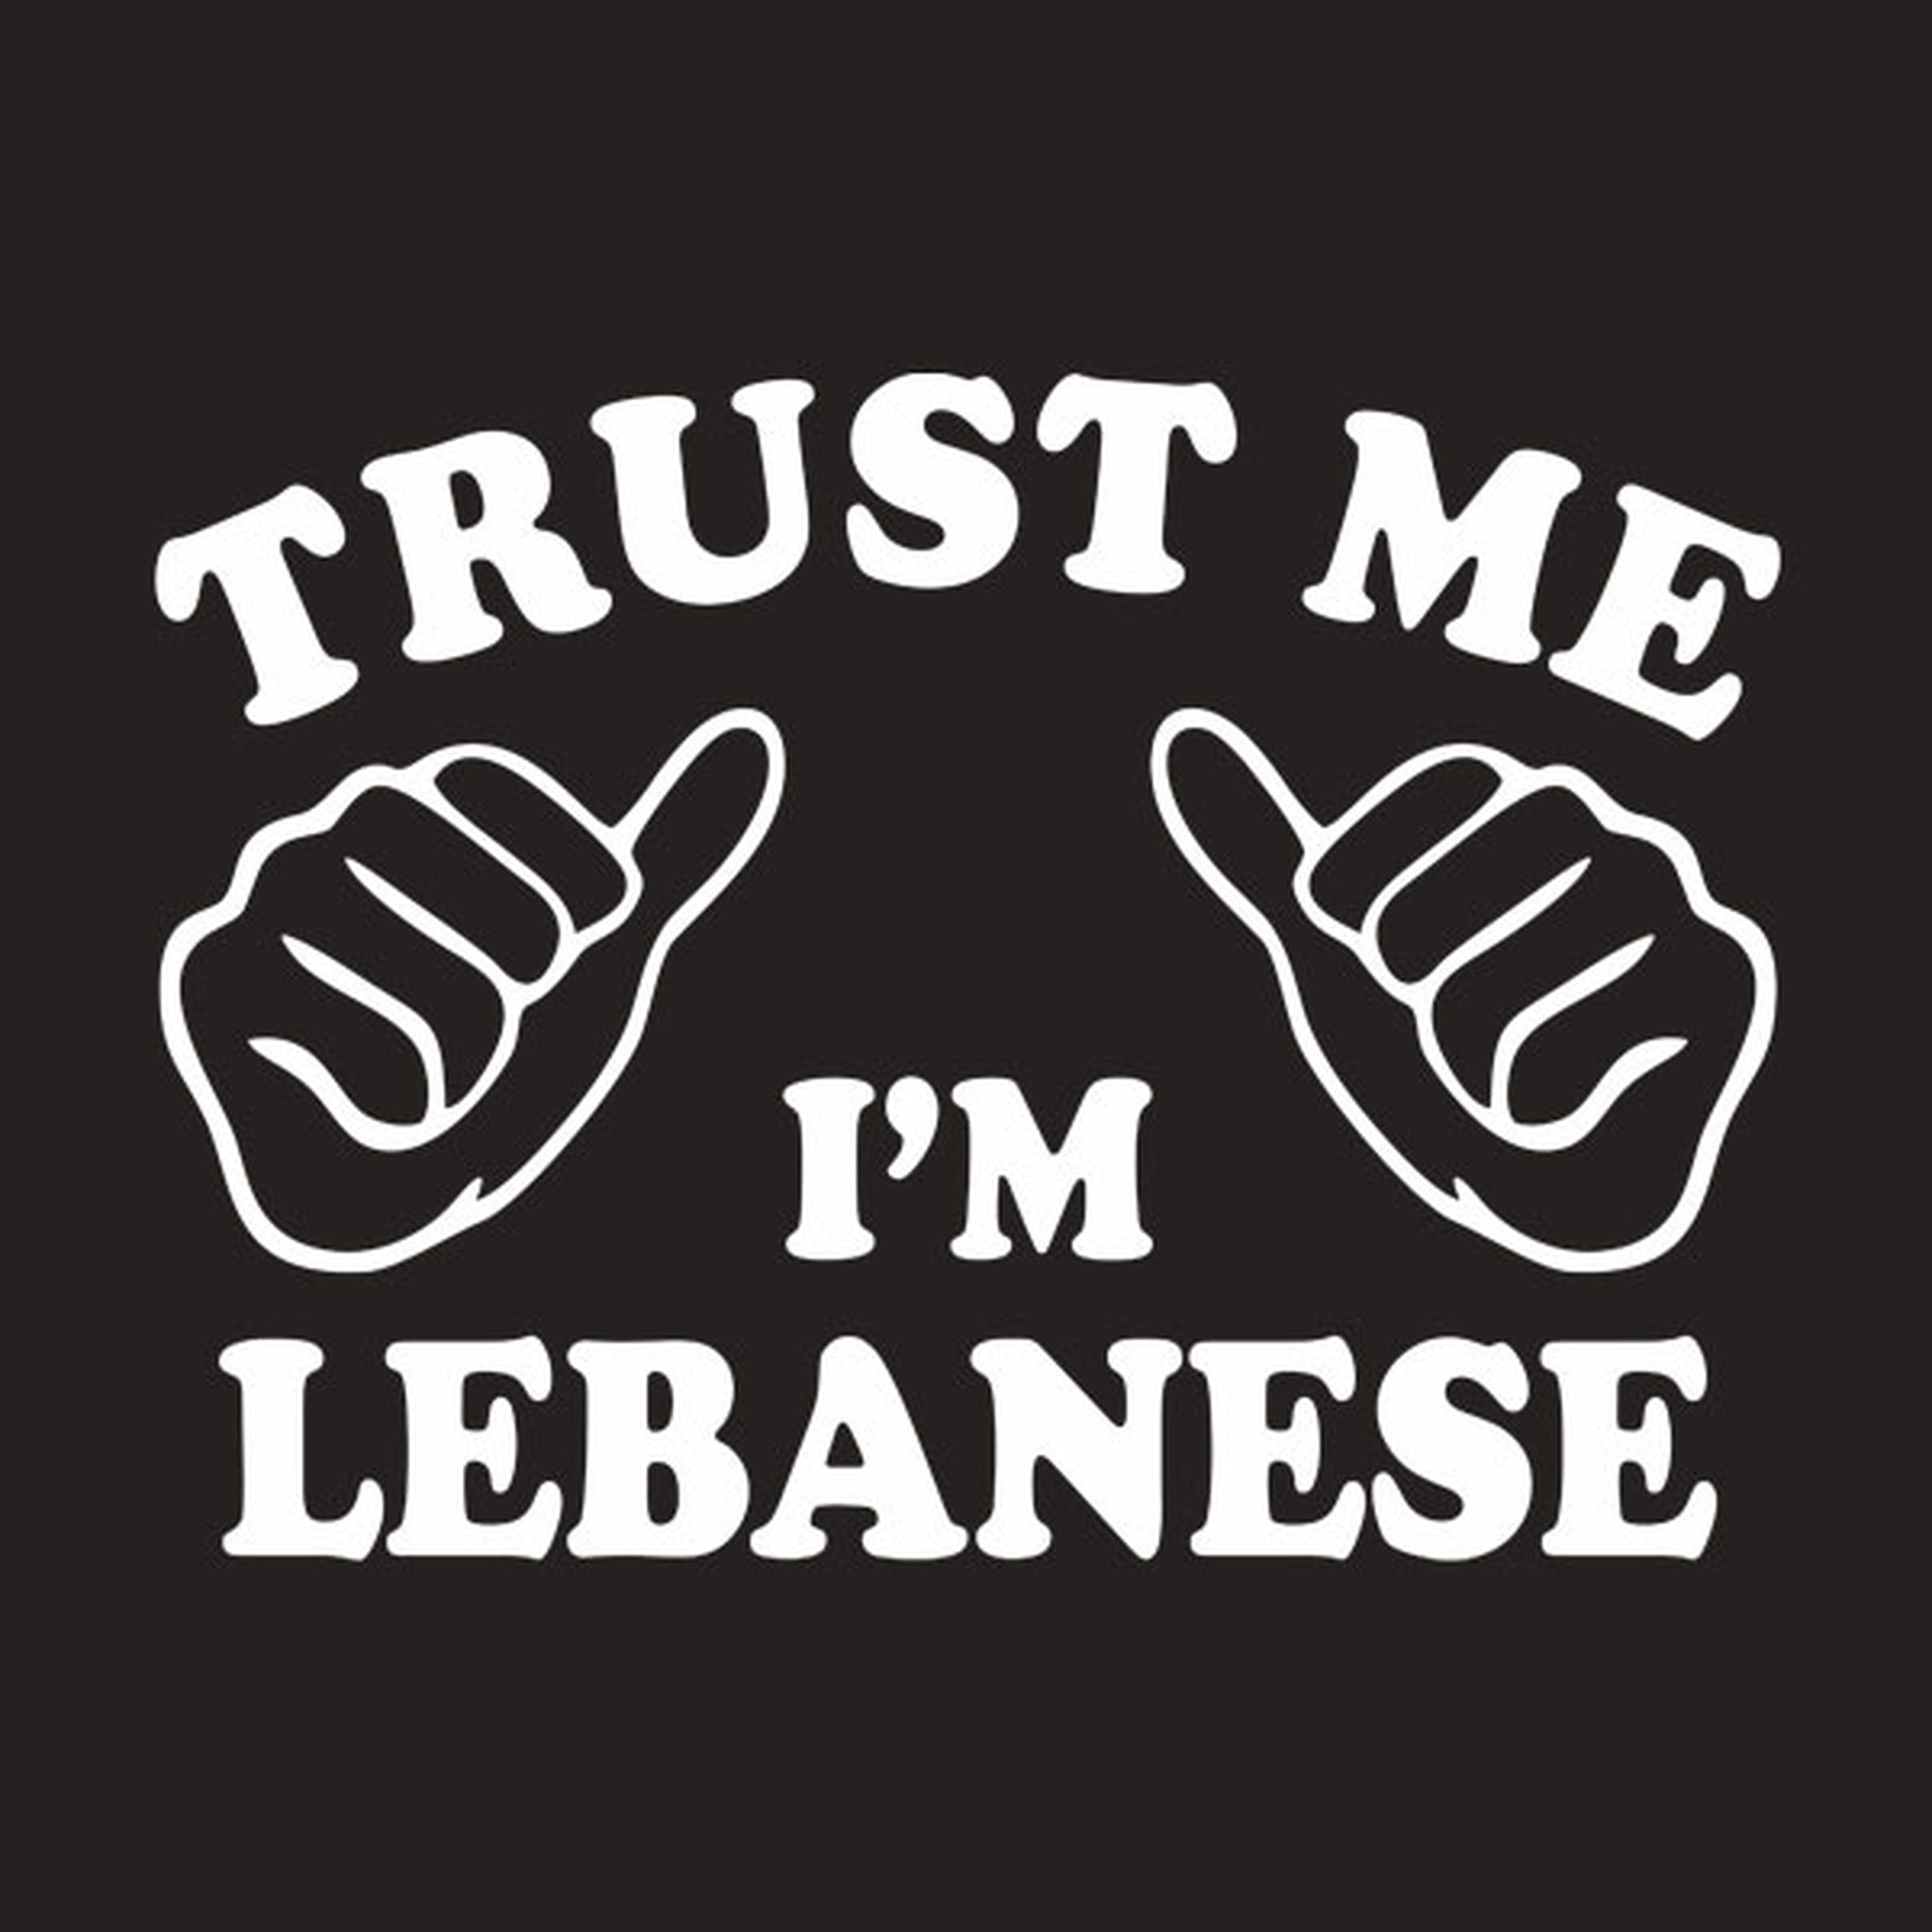 Trust me - I am Lebanese - T-shirt